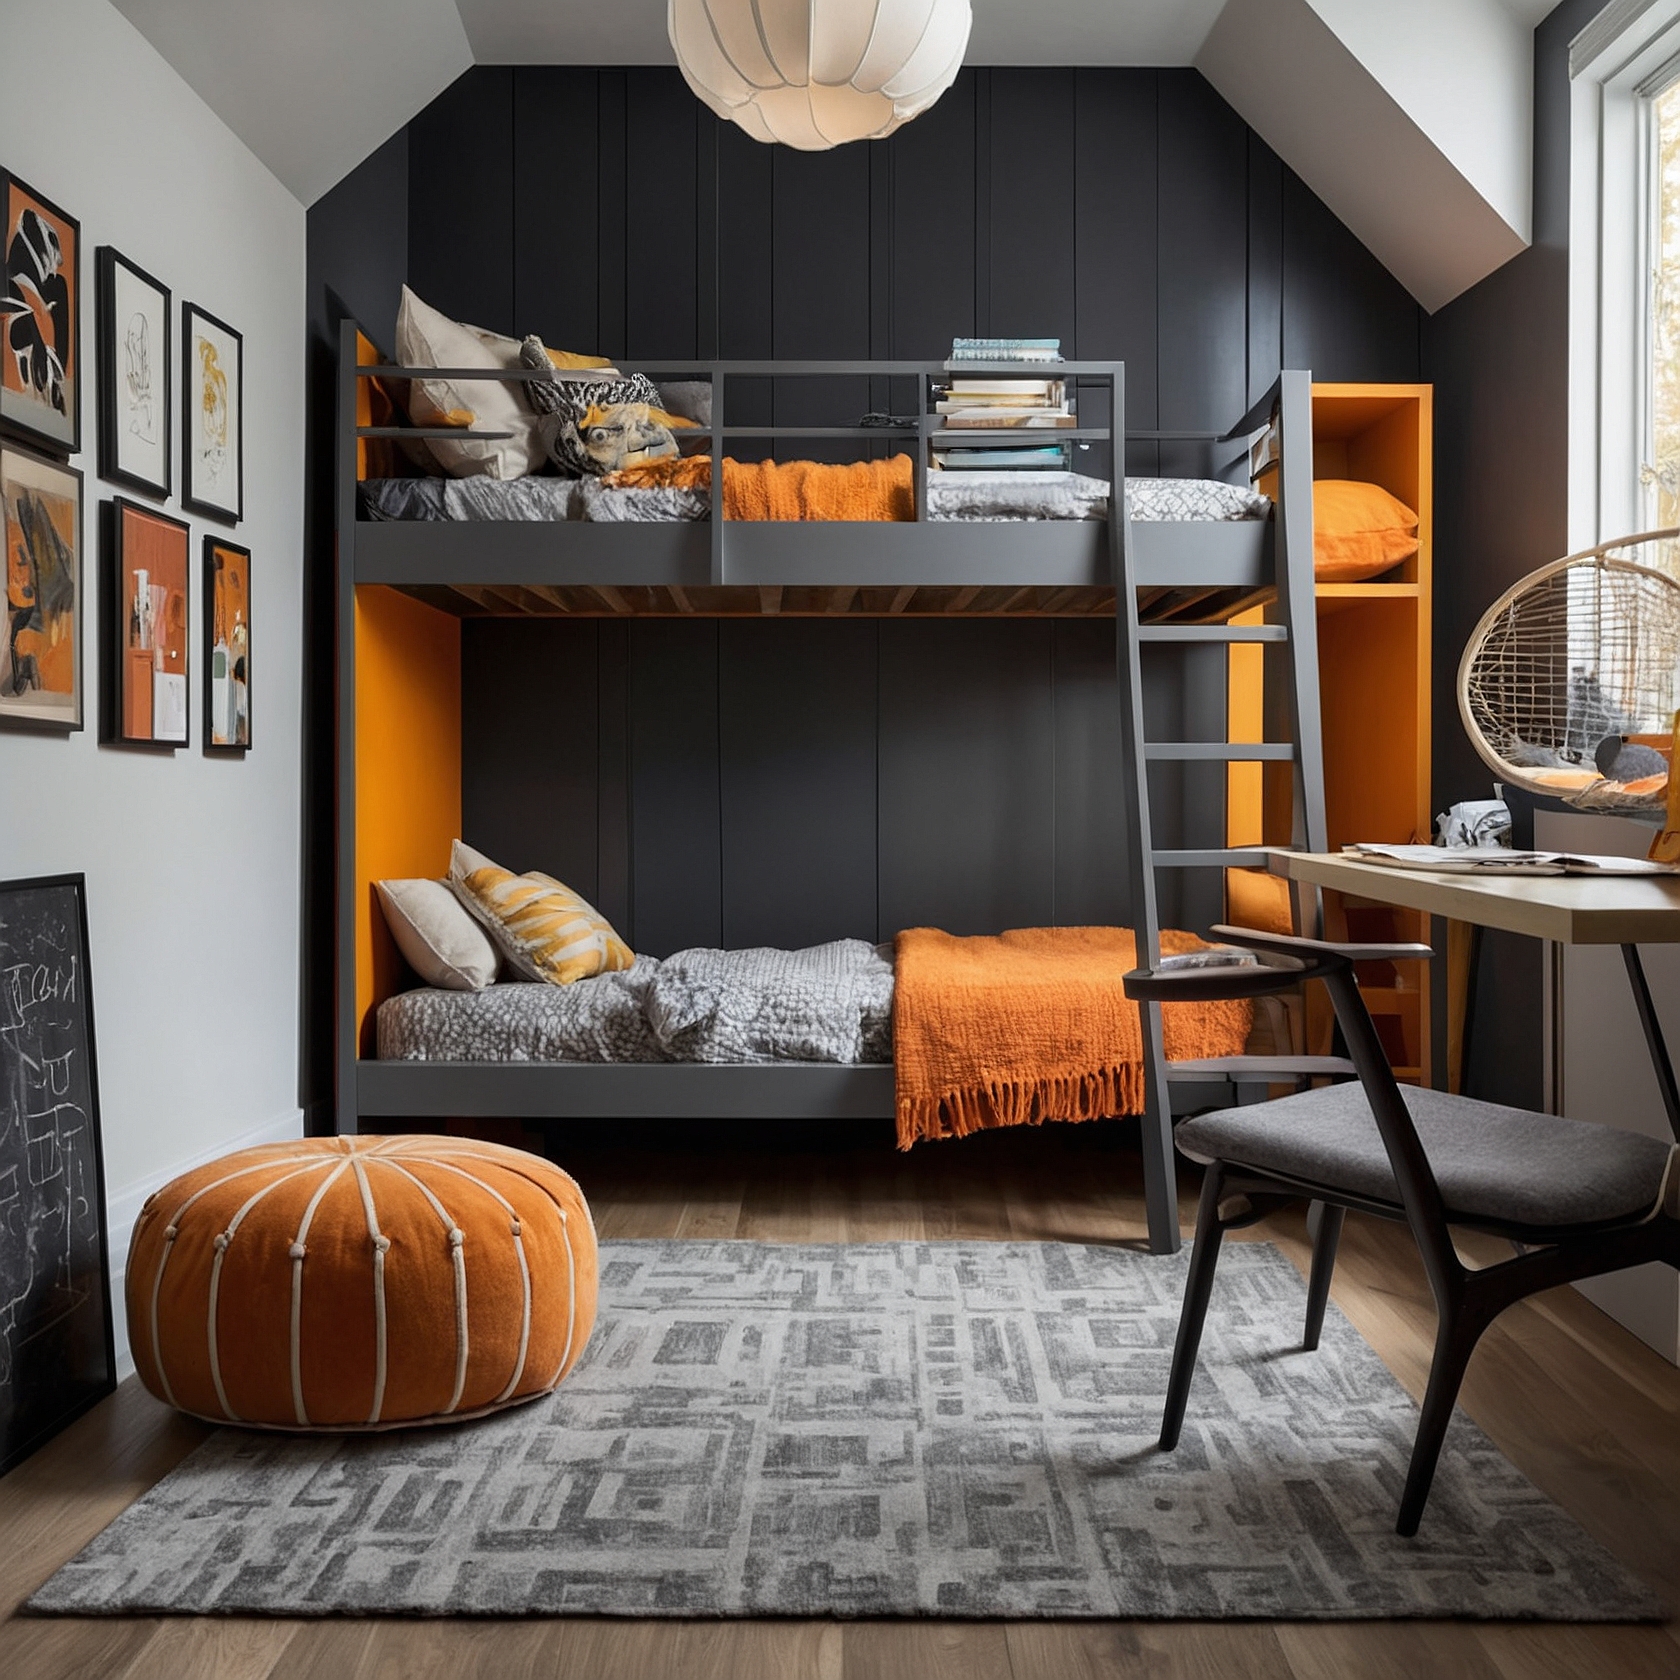 Bunk Bed GRay And Orange Bedroom